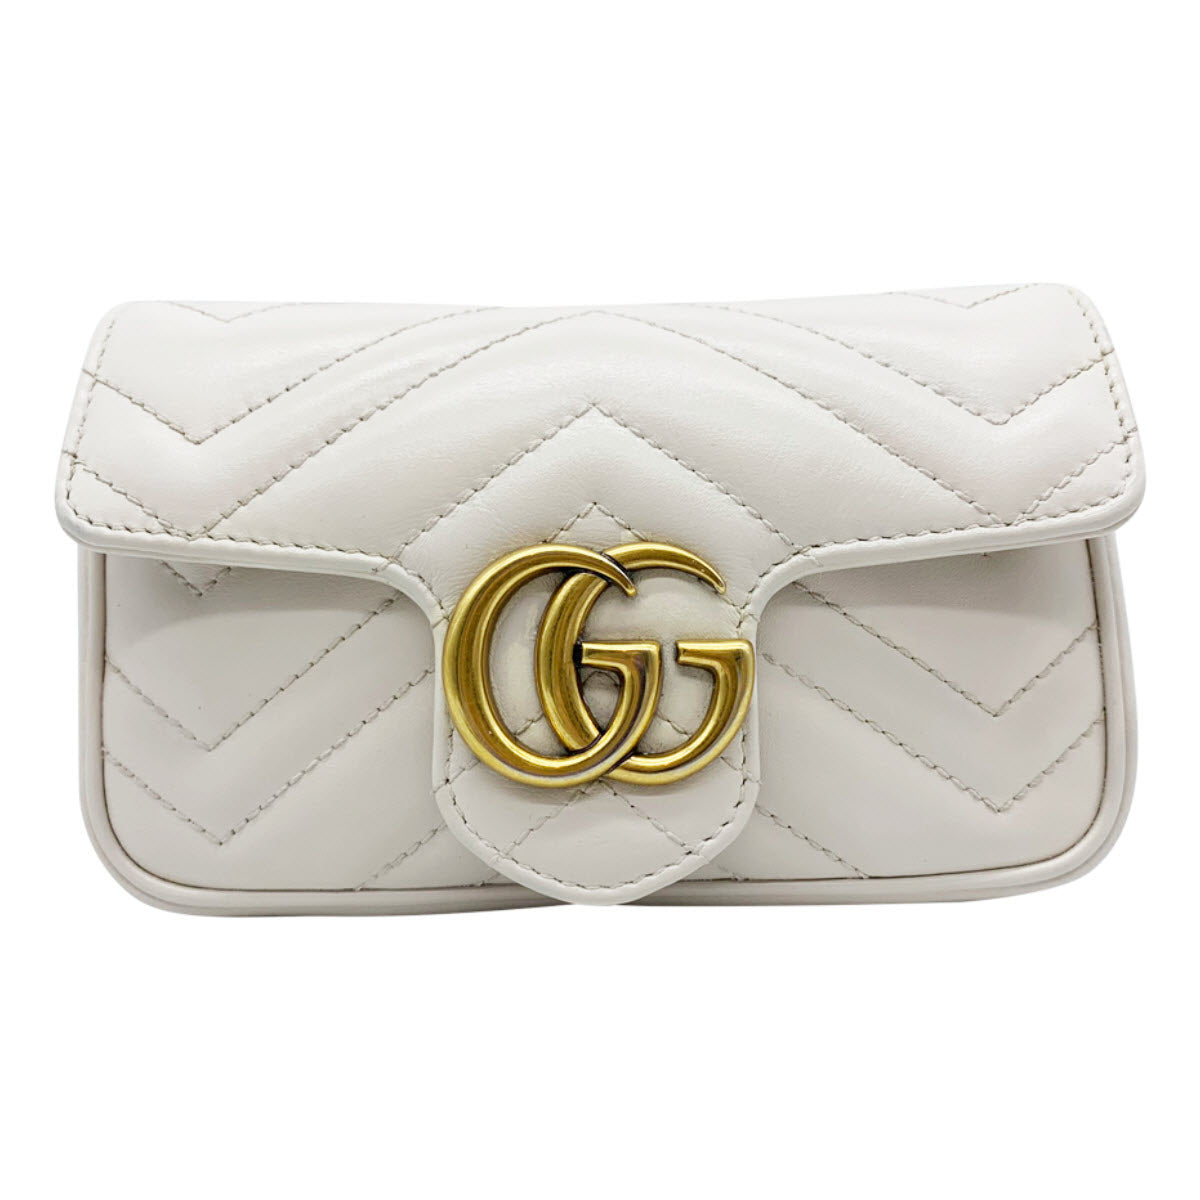 White GG Marmont super mini leather cross-body bag